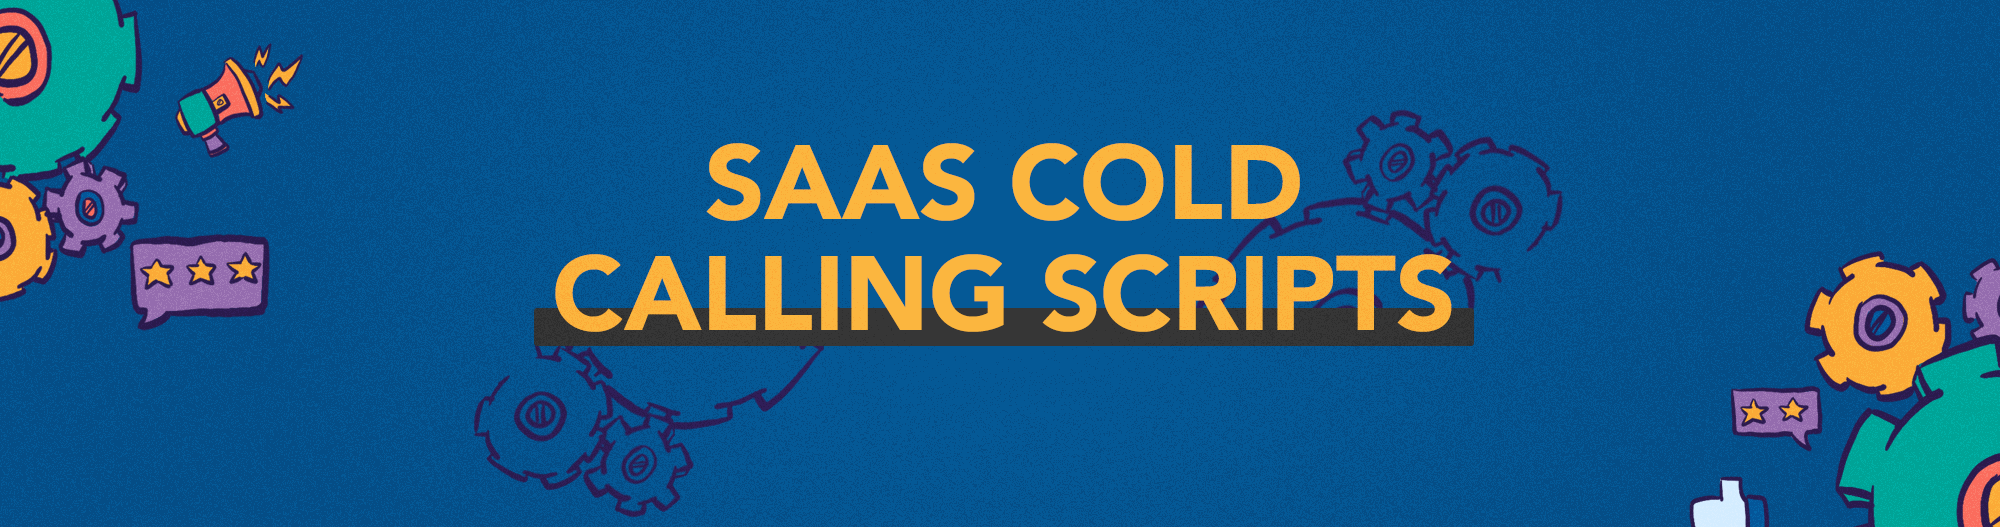 saas cold calling scripts